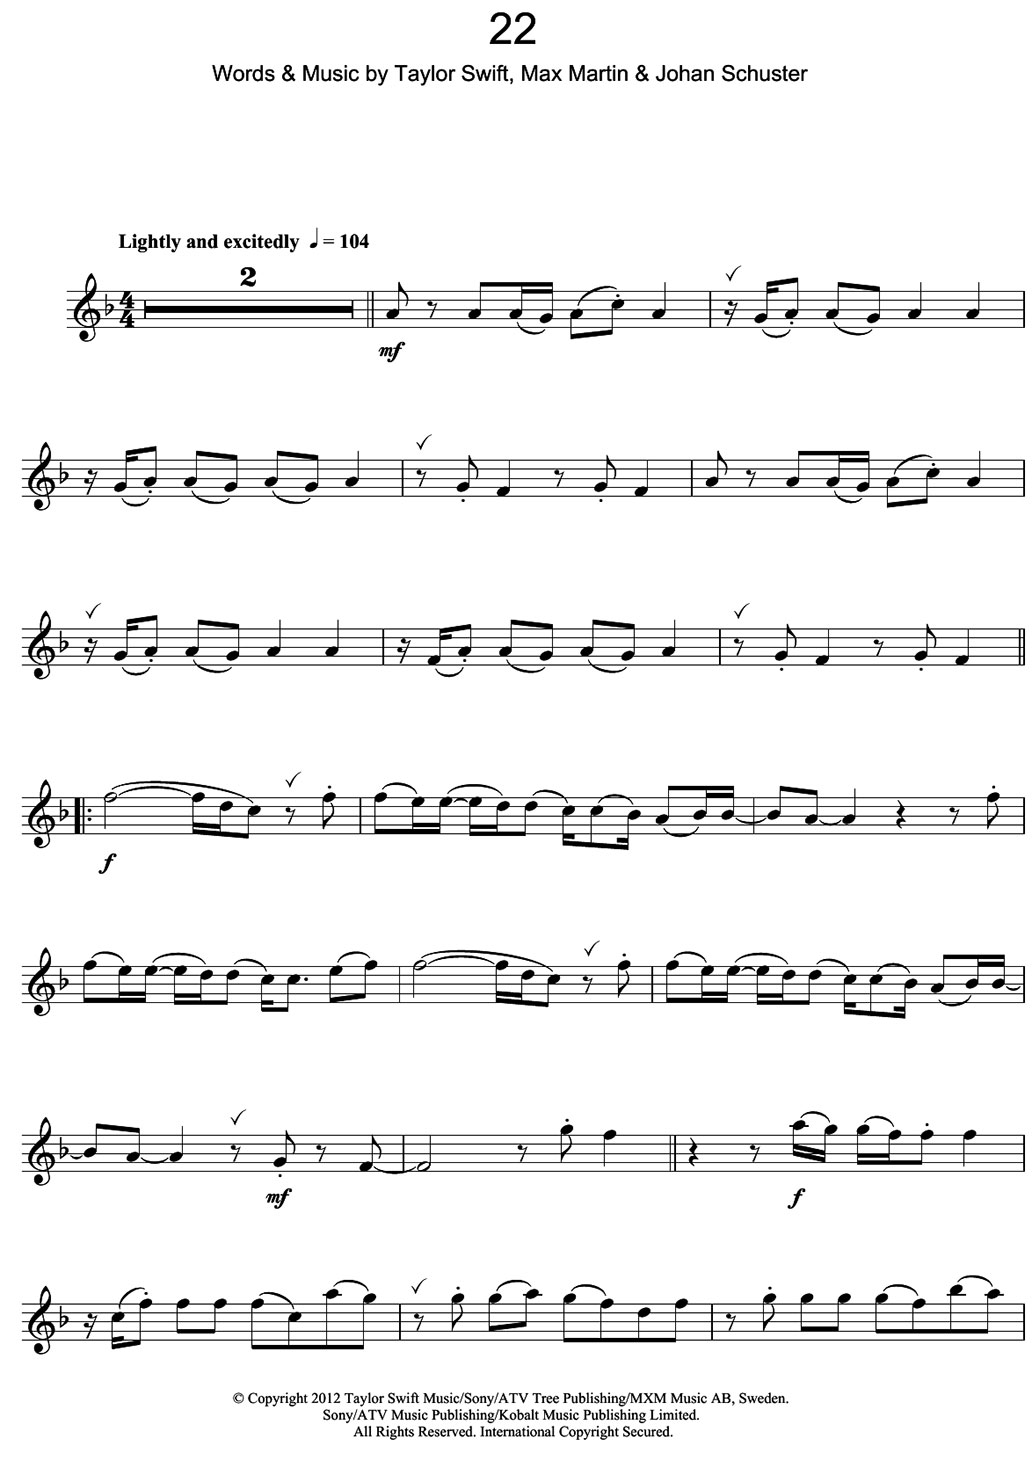 22 sheet music notes